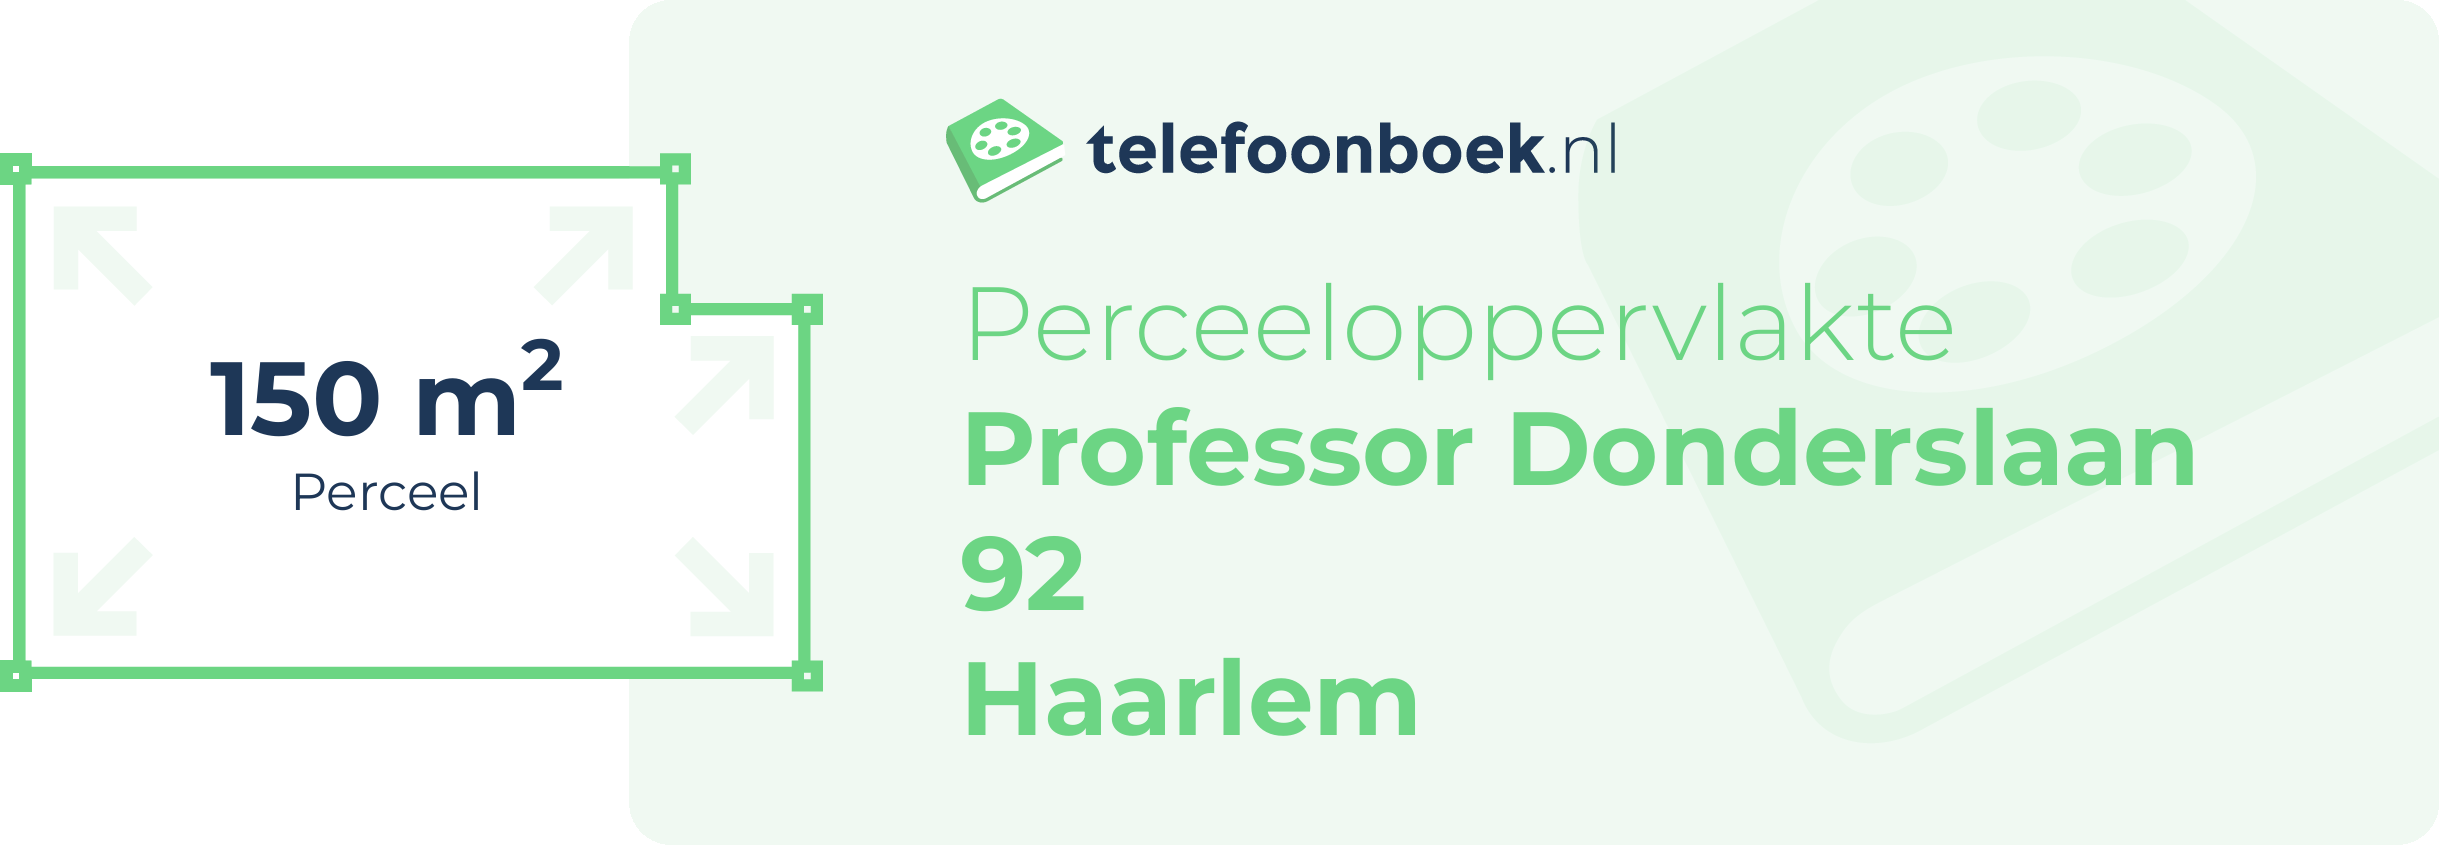 Perceeloppervlakte Professor Donderslaan 92 Haarlem